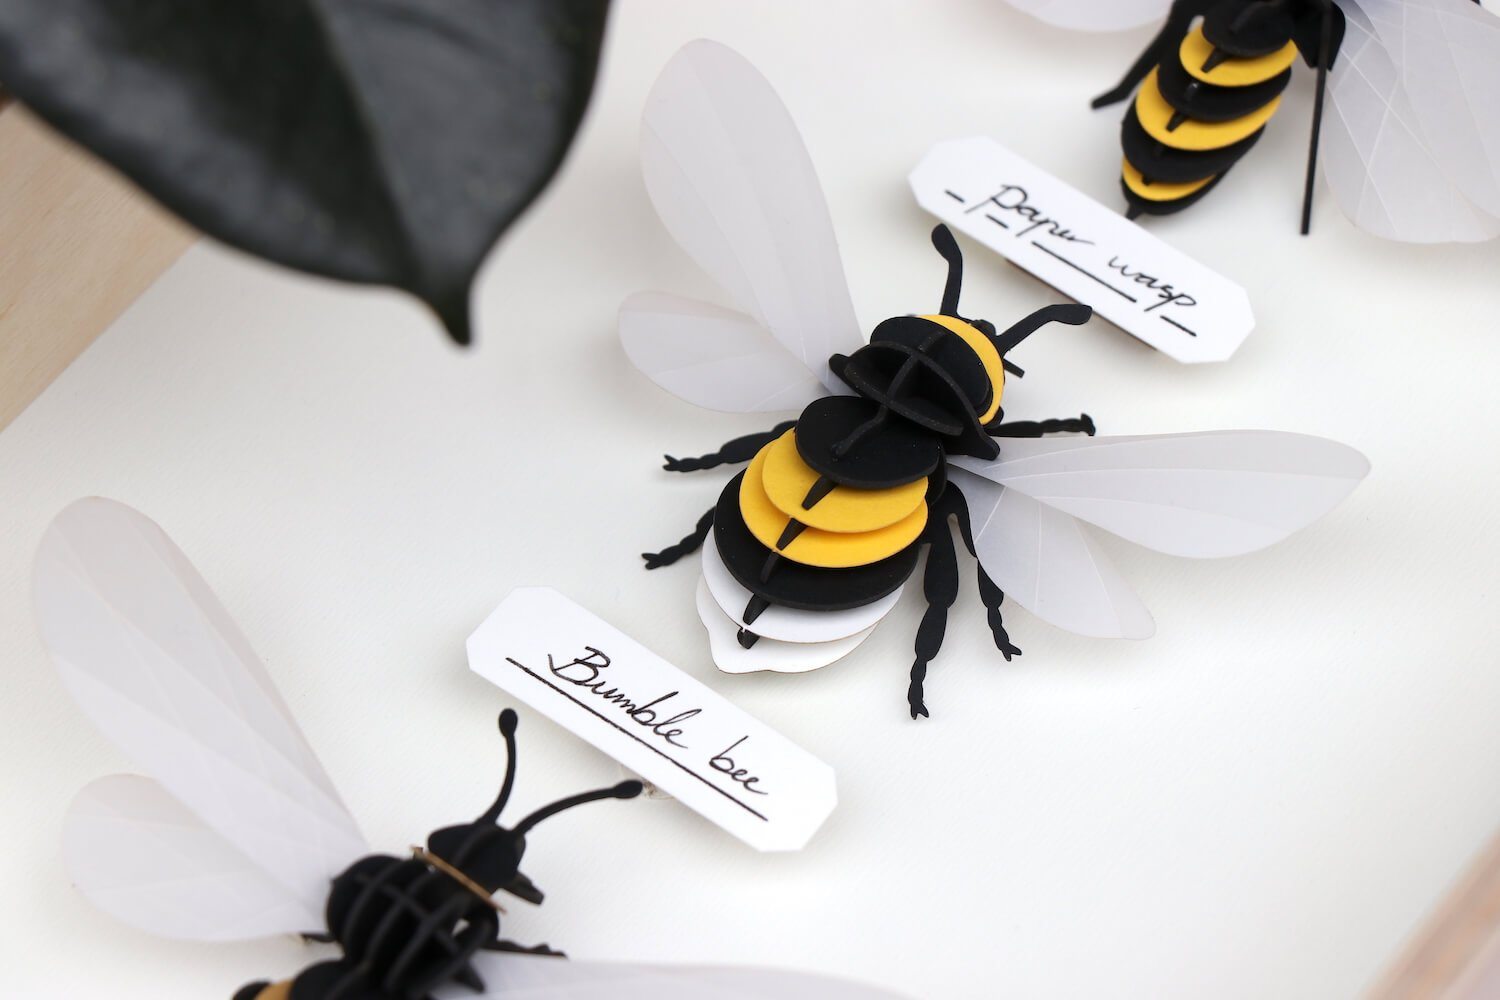 Bumble Bee - Kit insecte en carton Assembli 